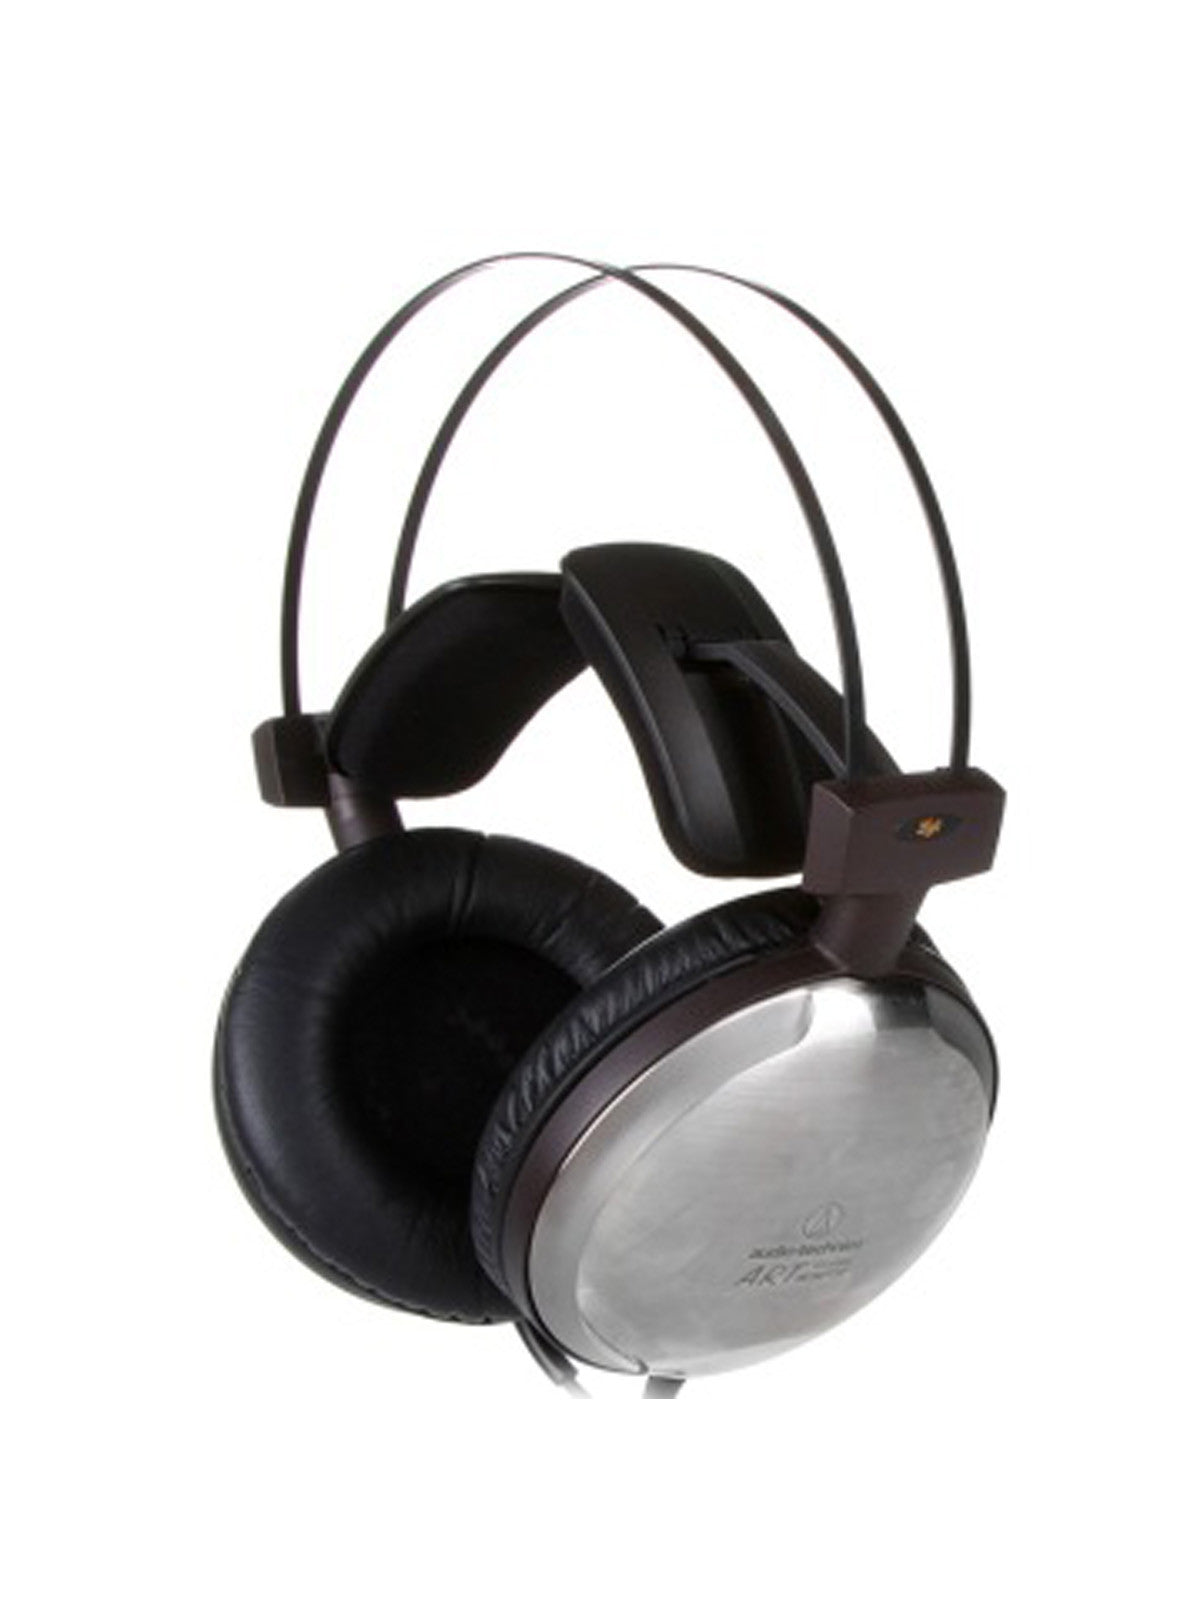 Audio Technica ATH-A2000X Audiophile Closed-back Dynamic Headphone